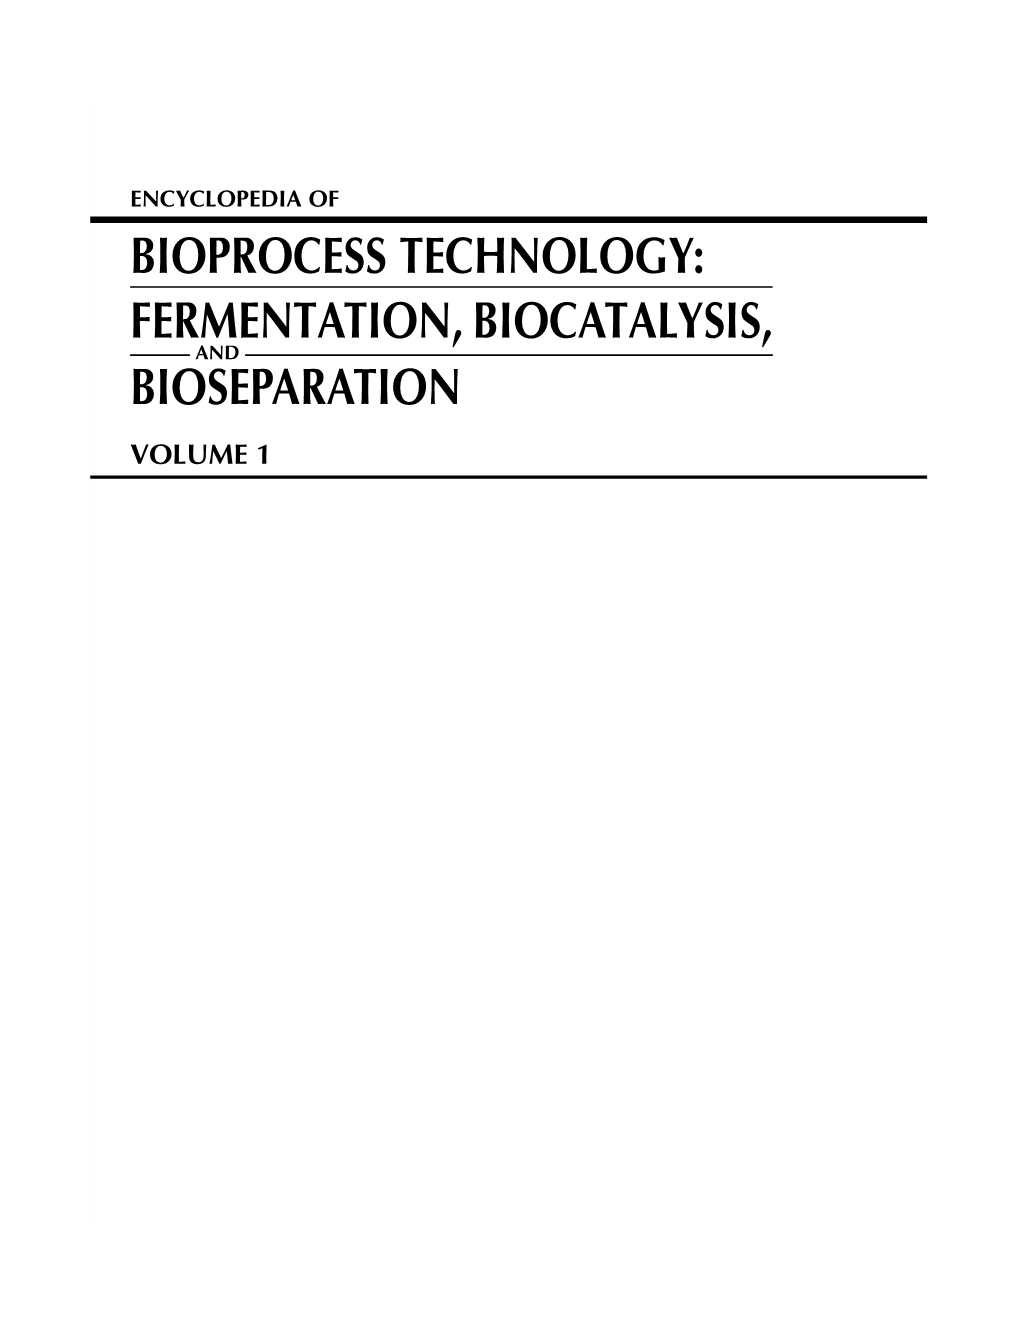 Bioprocess Technology: Fermentation, Biocatalysis, and Bioseparation Volume 1 Wiley Biotechnology Encyclopedias